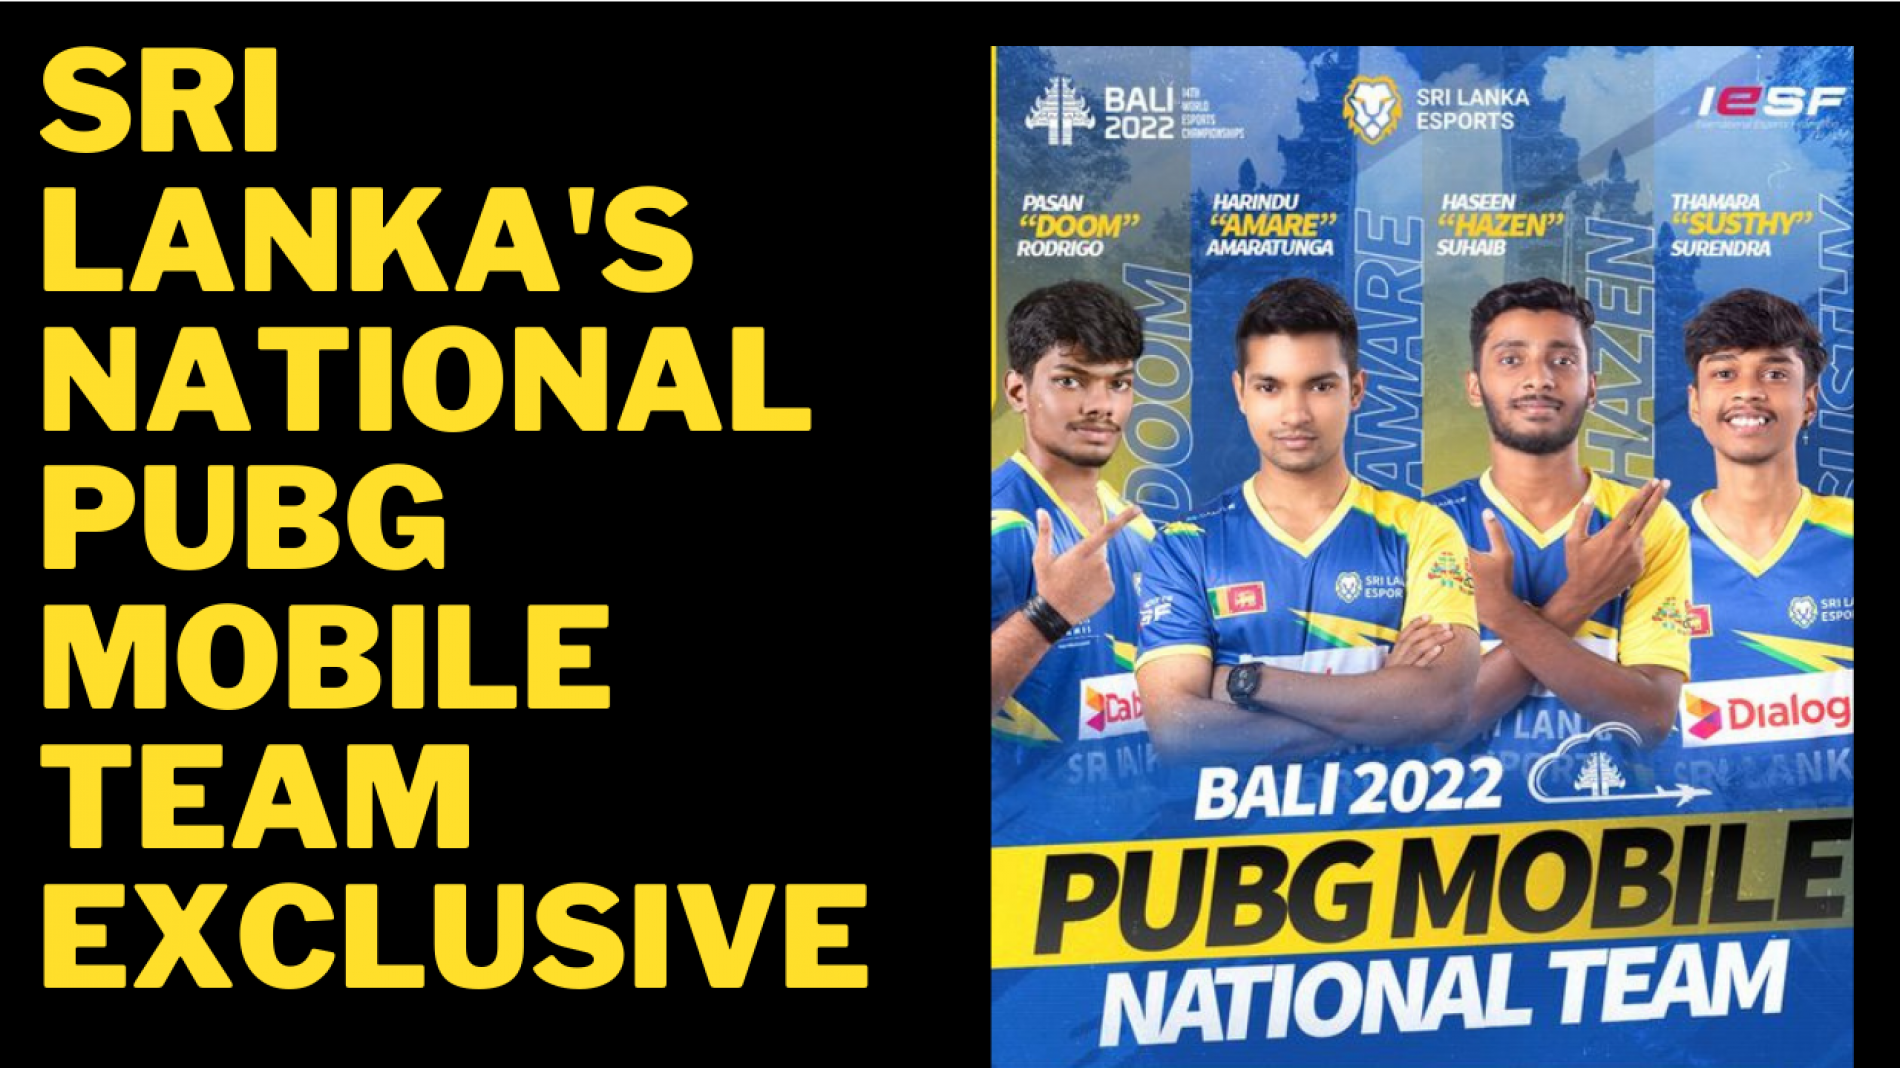 Sri Lanka’s National PUBG Mobile Team Exclusive!